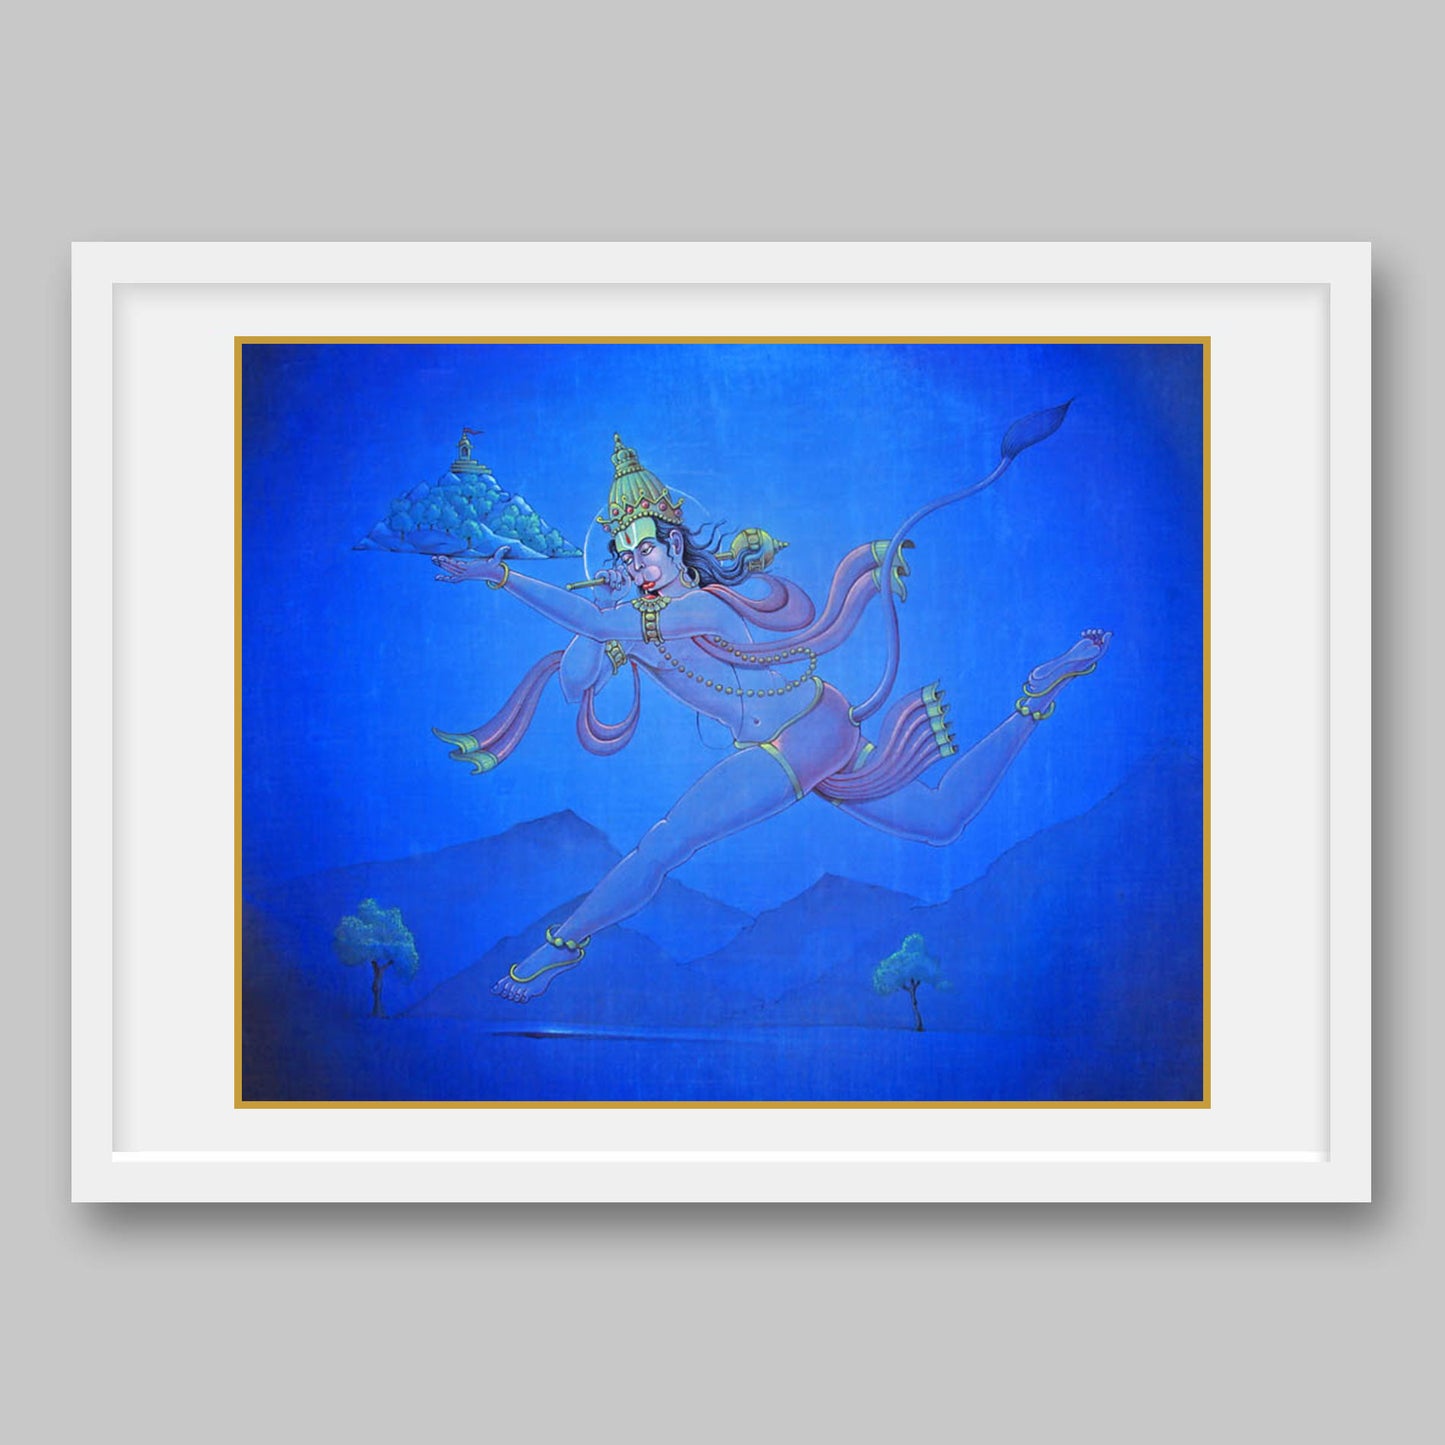 Hanuman – High Quality Print of Artwork by Pieter Weltevrede